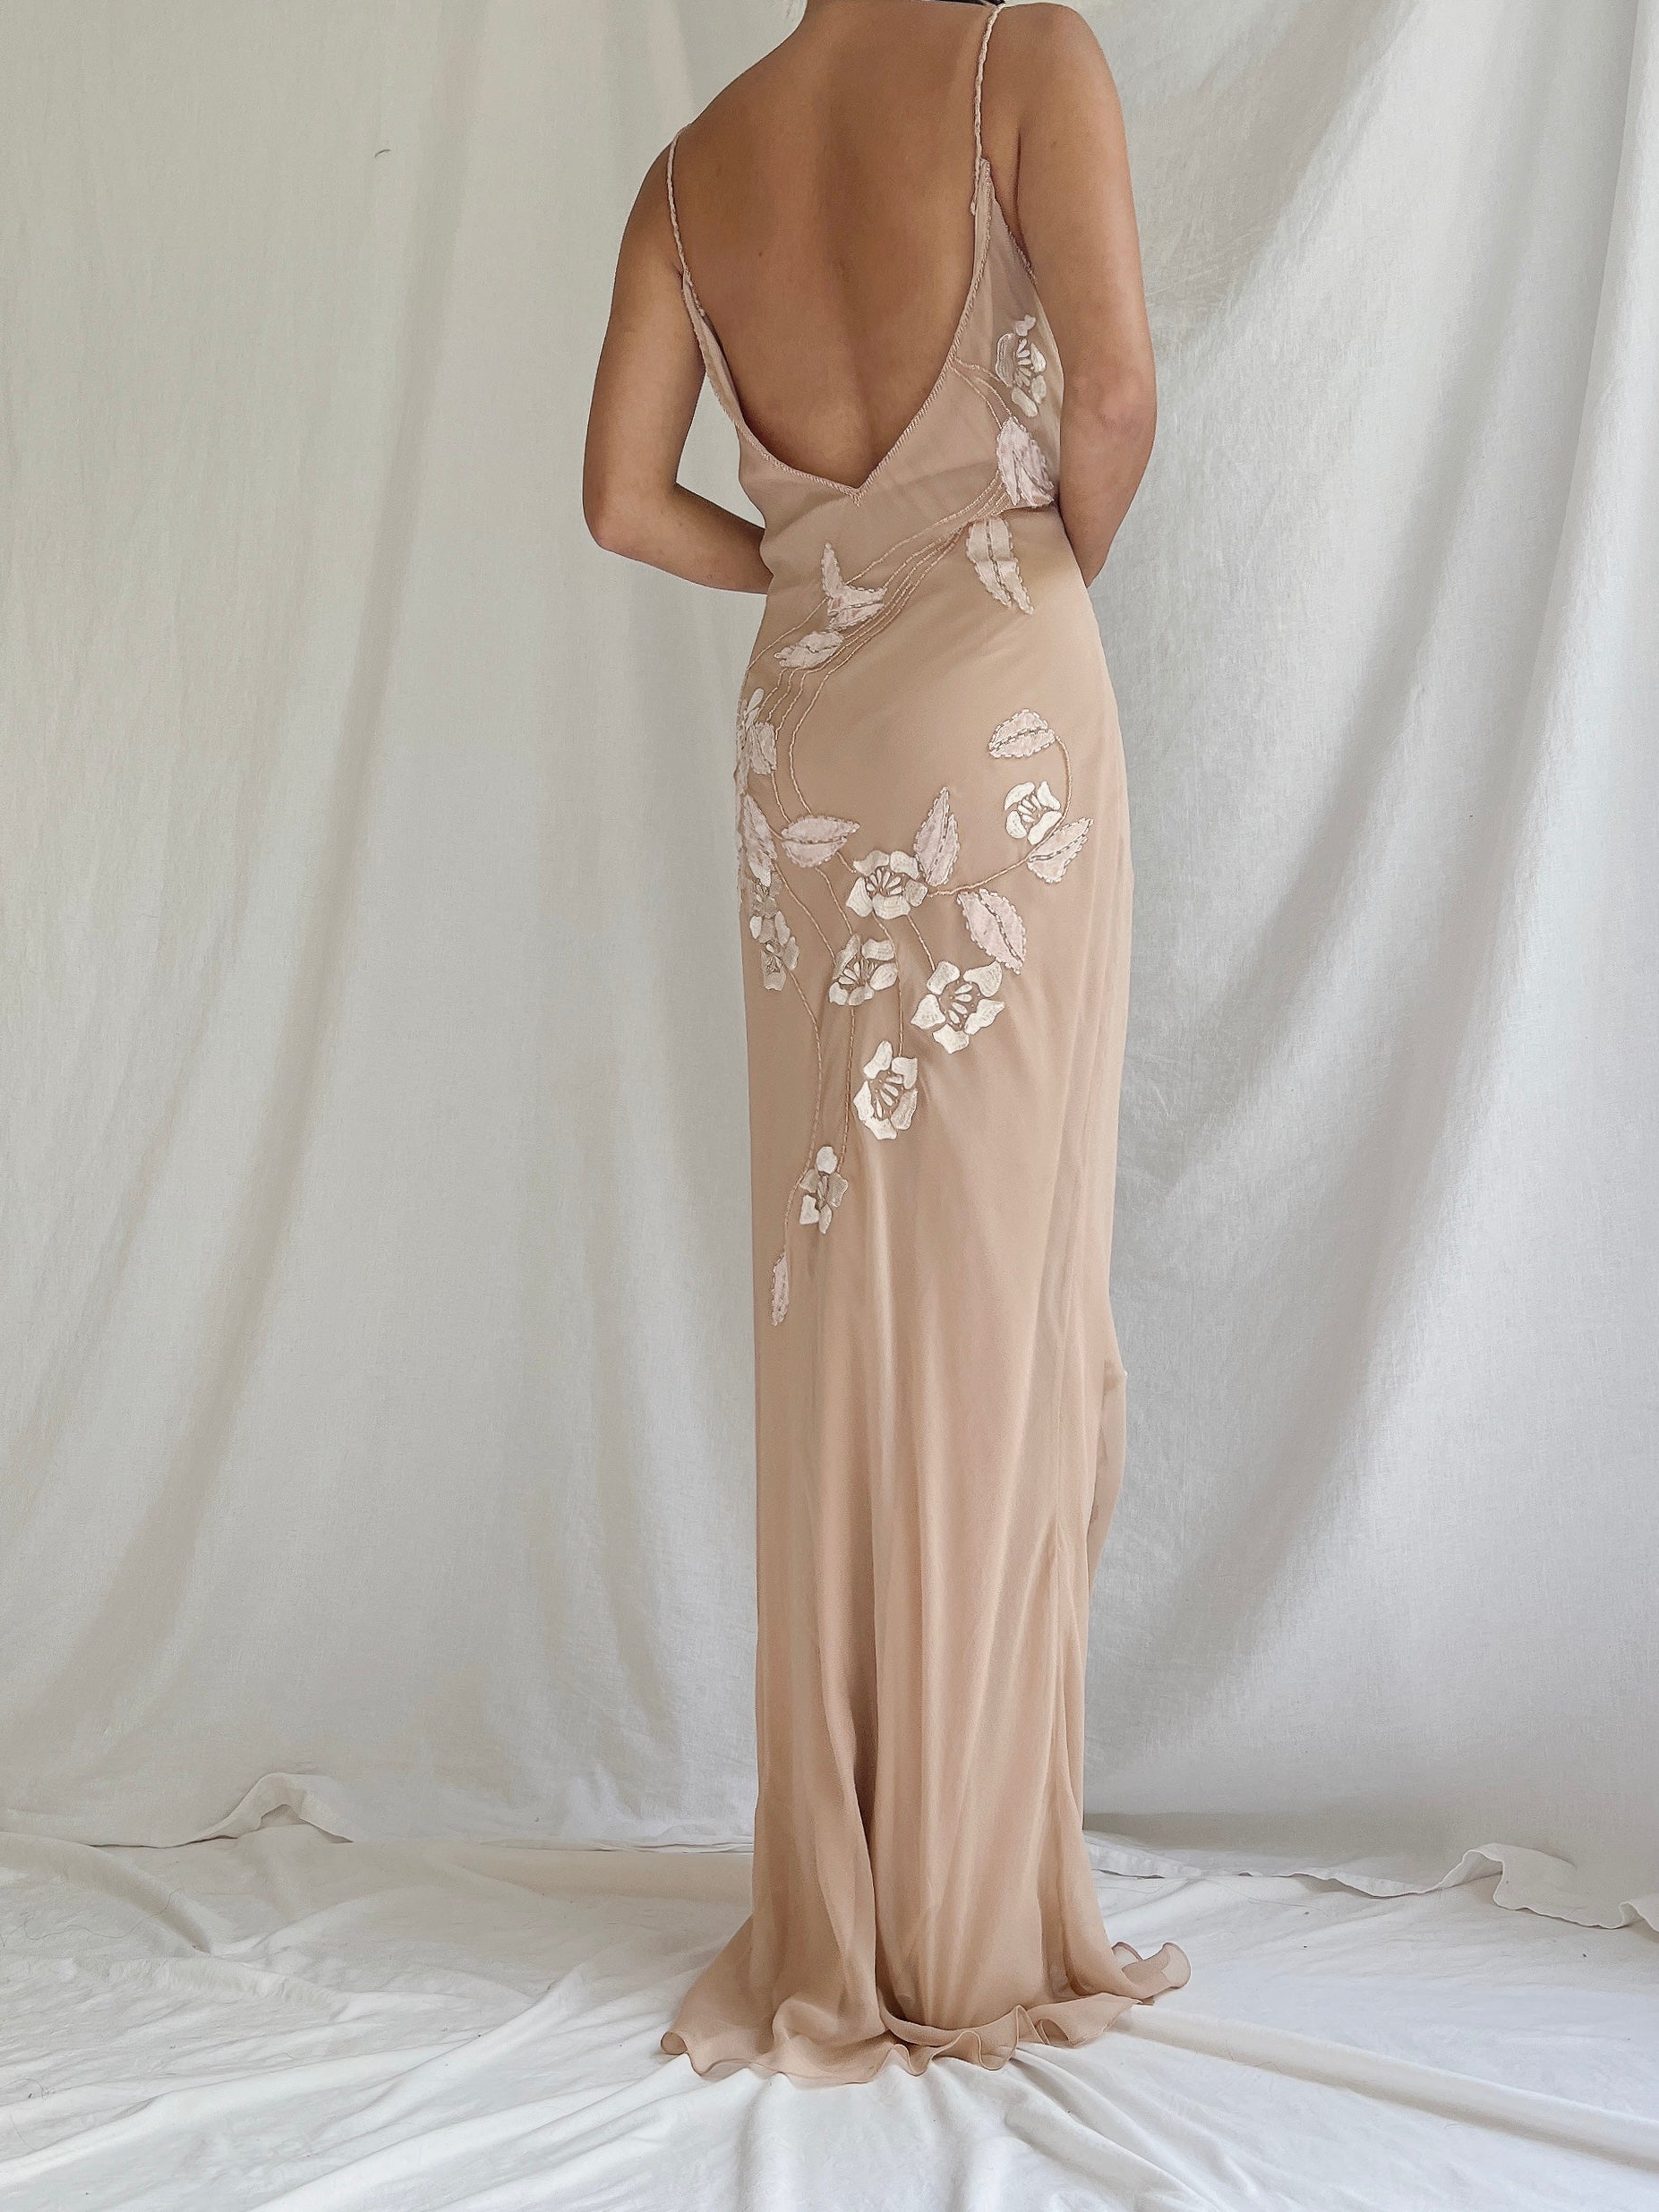 Vintage Blush Nude Silk Bias Cut Gown - S-M/4-8